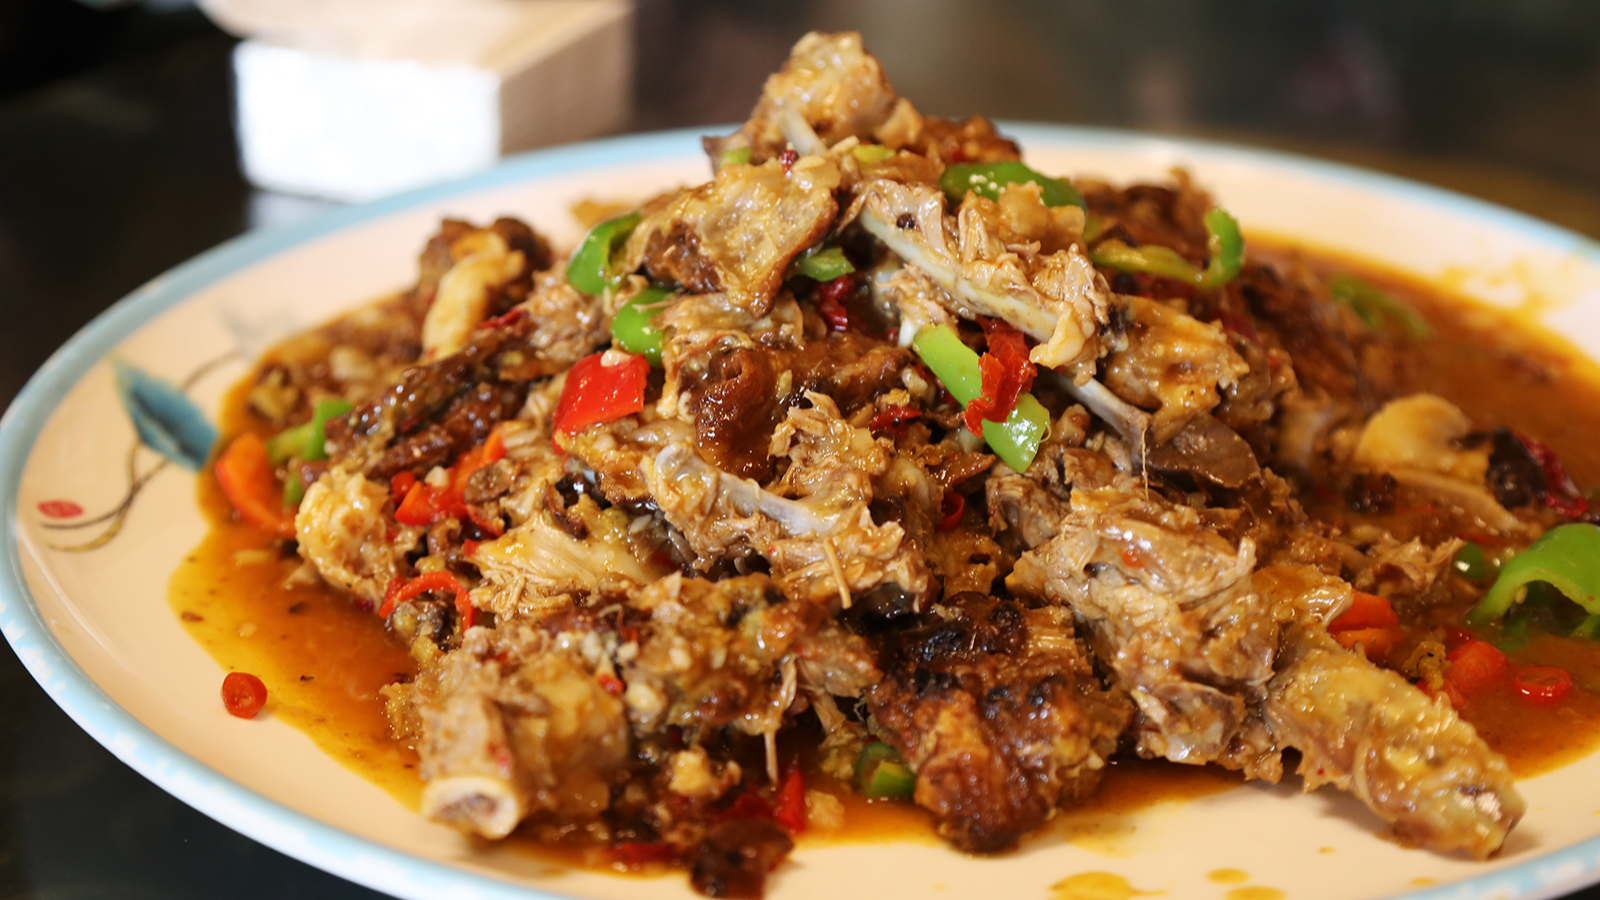 Flavorful Xinjiang cuisine